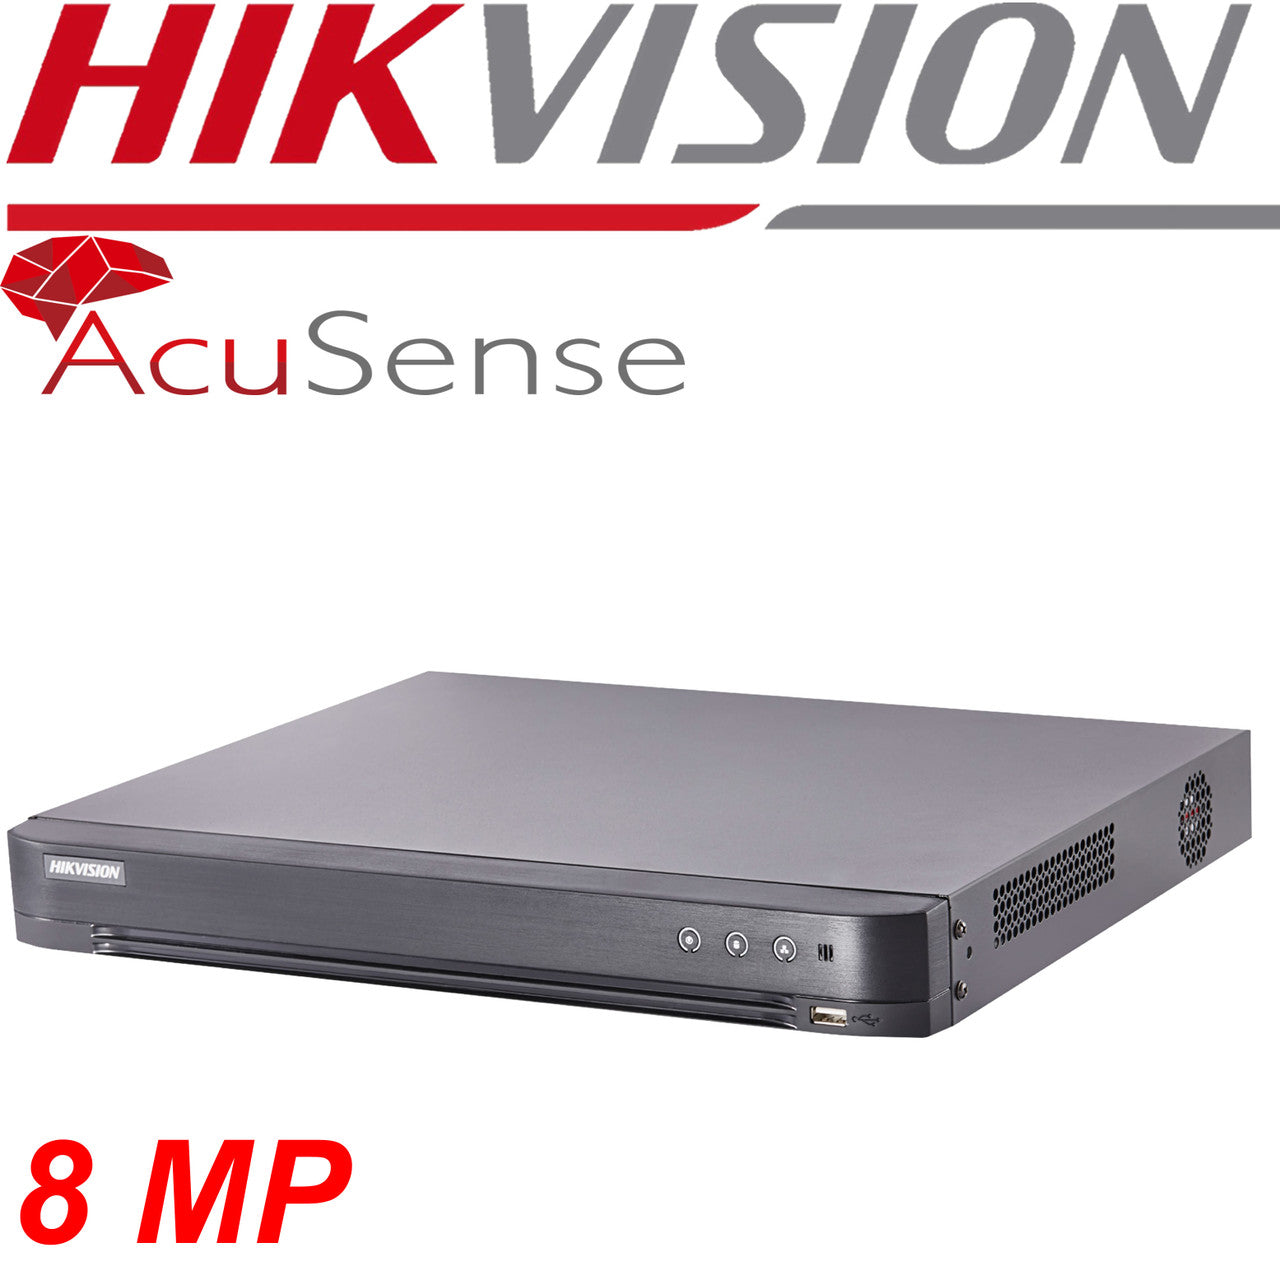 Hikvision Turbo Accusense 8 channel DVR